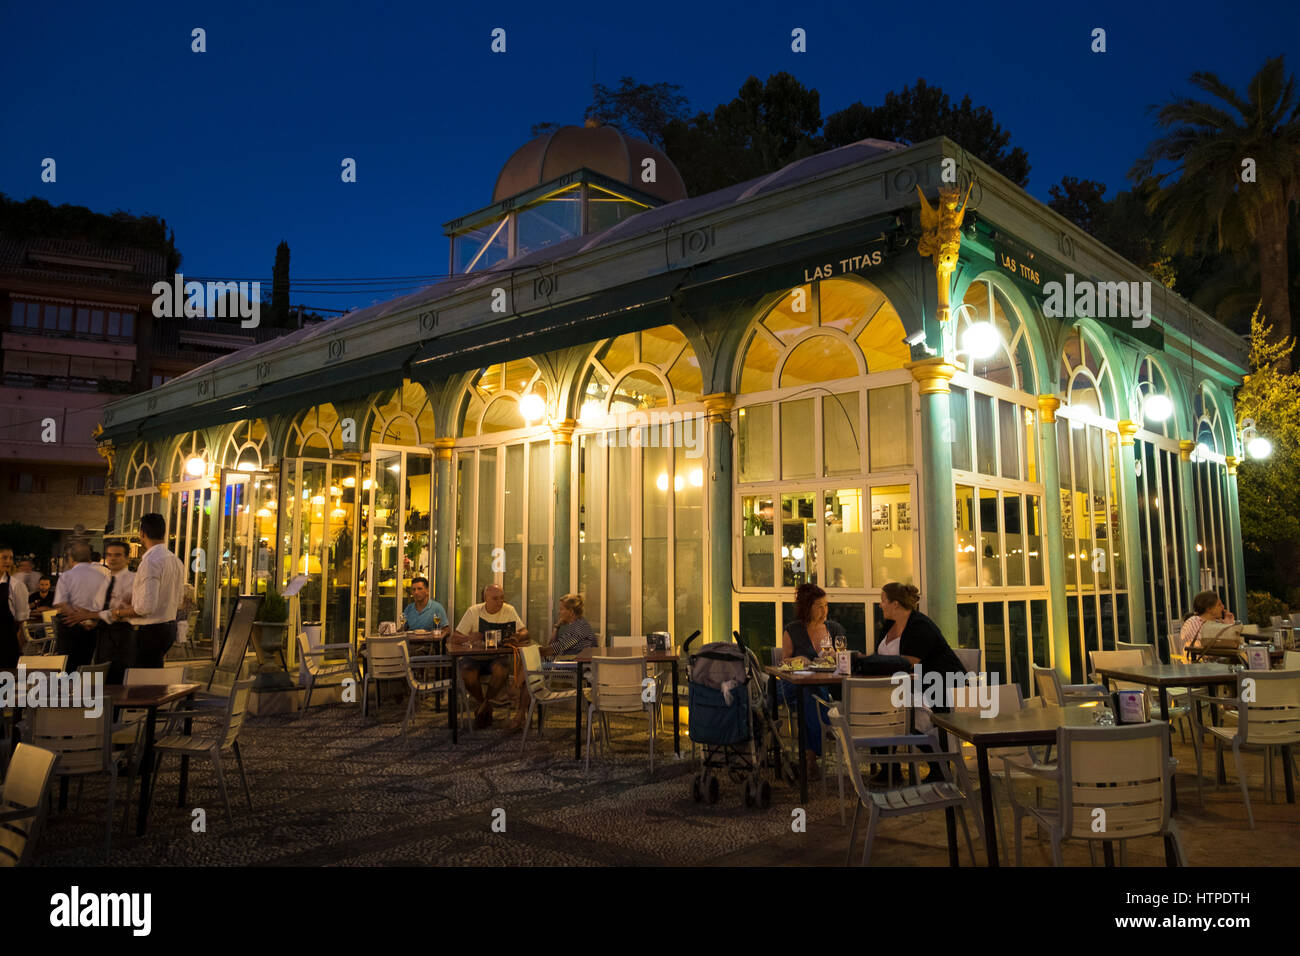 The Kiosko Restaurante Terraza Las Titas in the Plaza de Humillaredo on a  summer evening in Granada Spain Stock Photo - Alamy